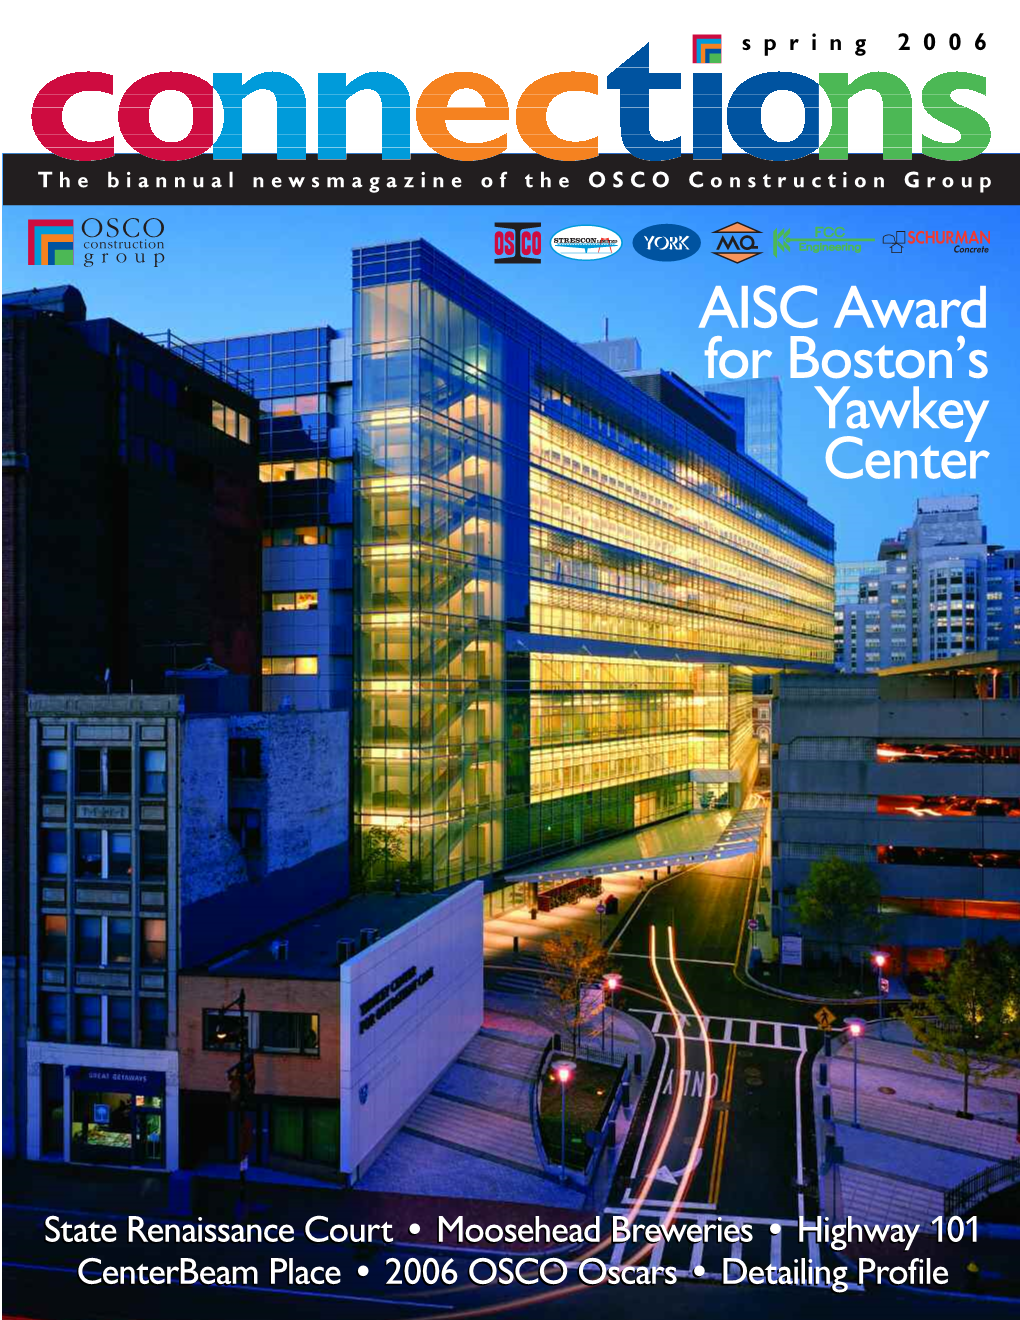 AISC Award for Boston's Yawkey Center